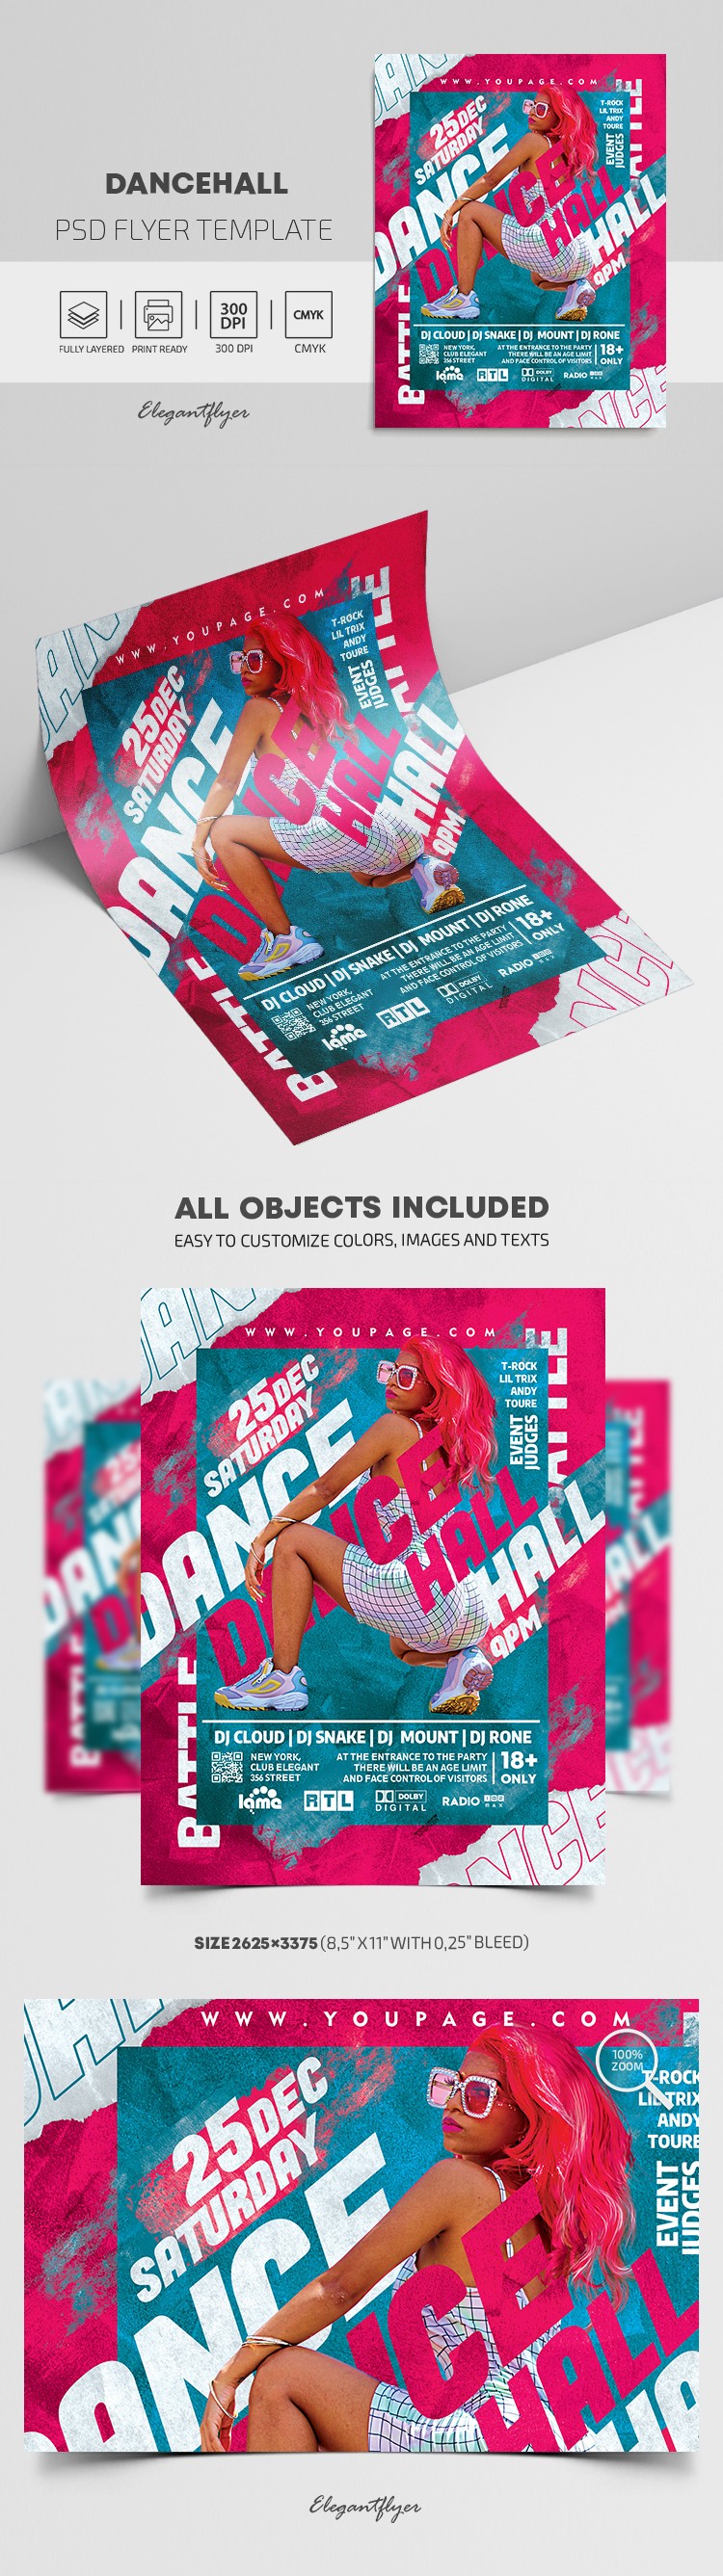 Dancehall Flyer by ElegantFlyer